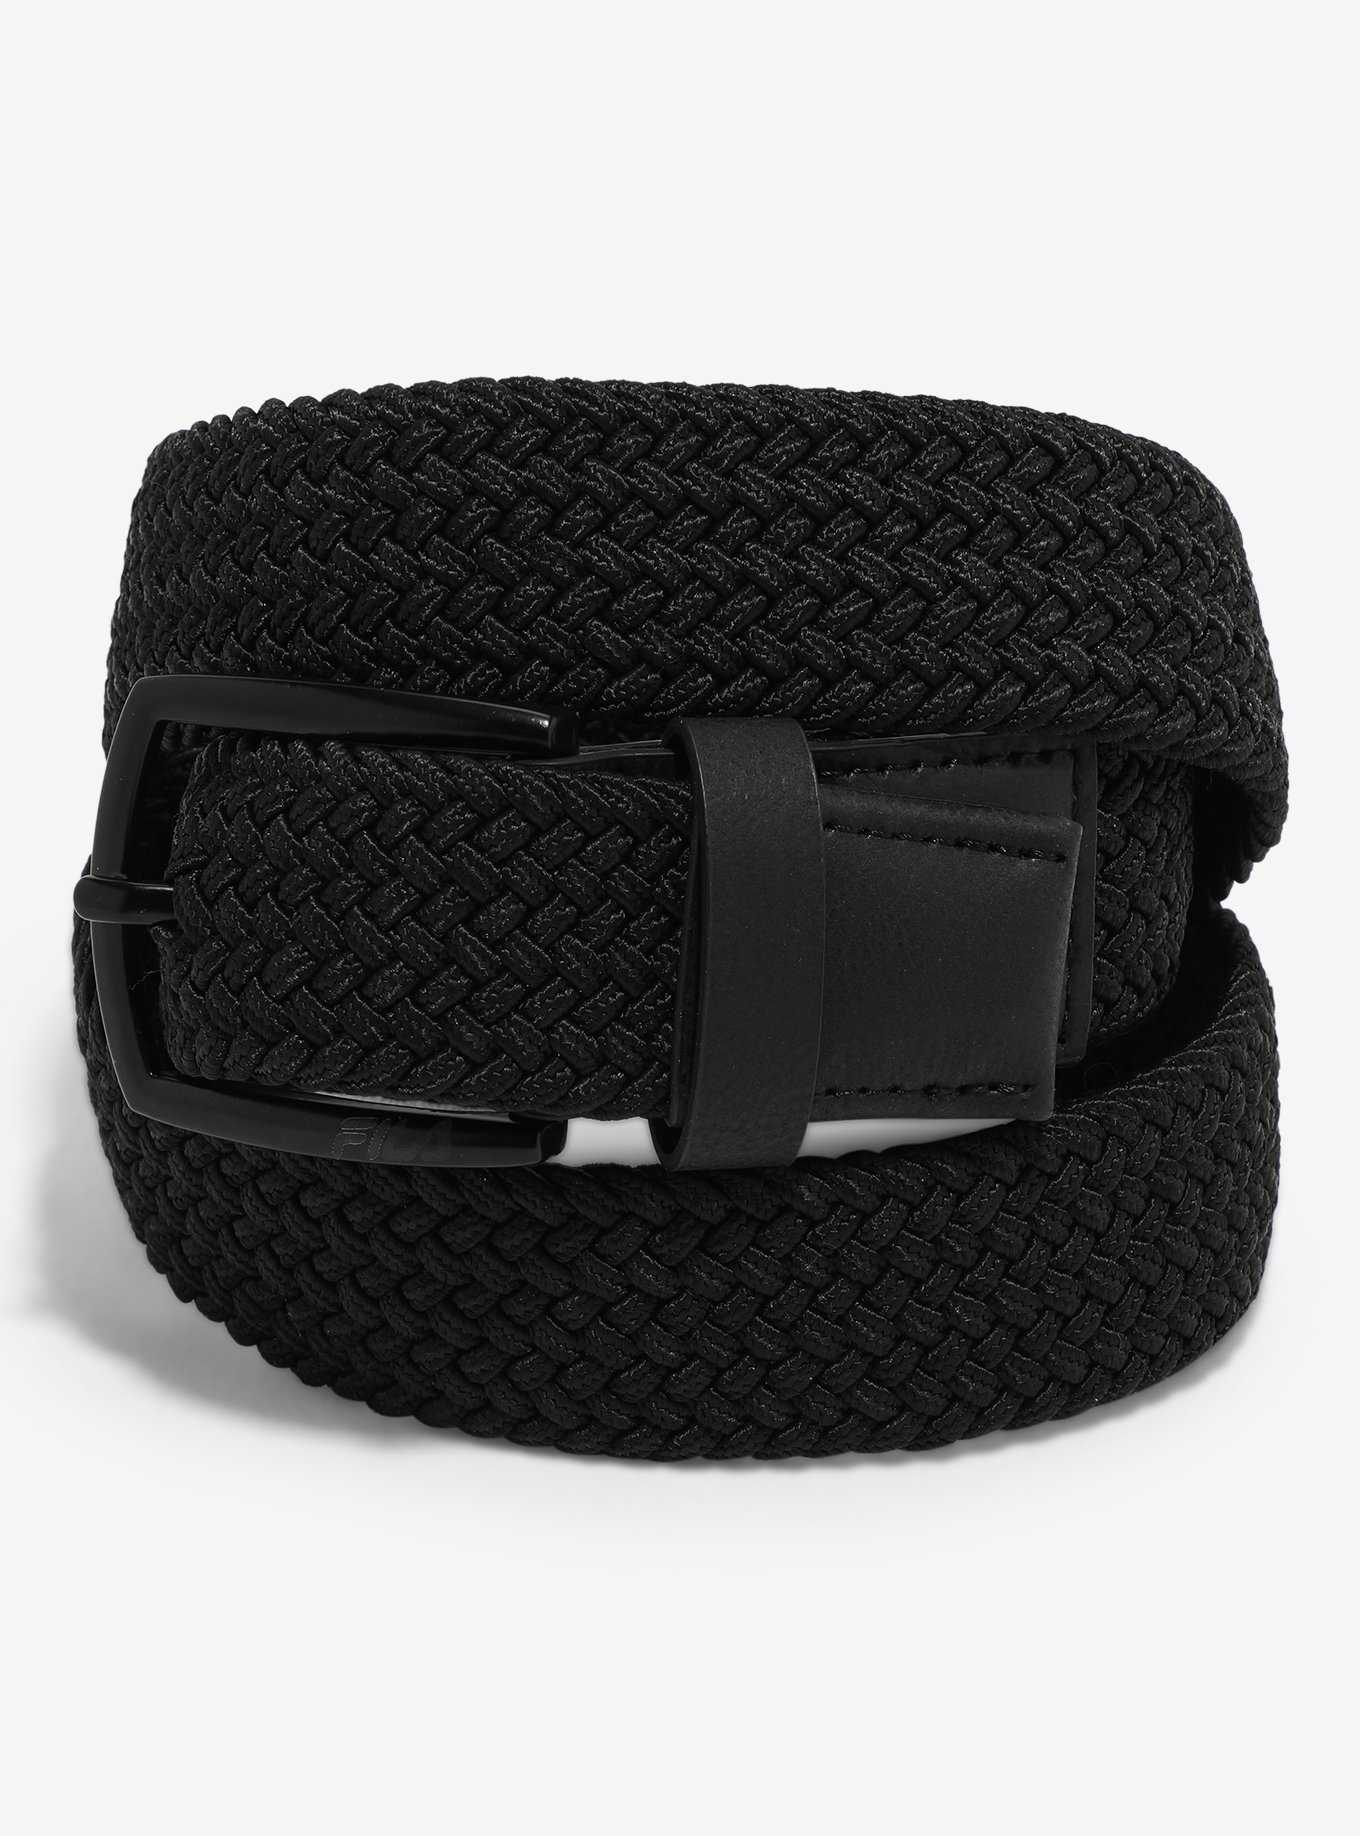 FILA Black Braided Belt, , hi-res